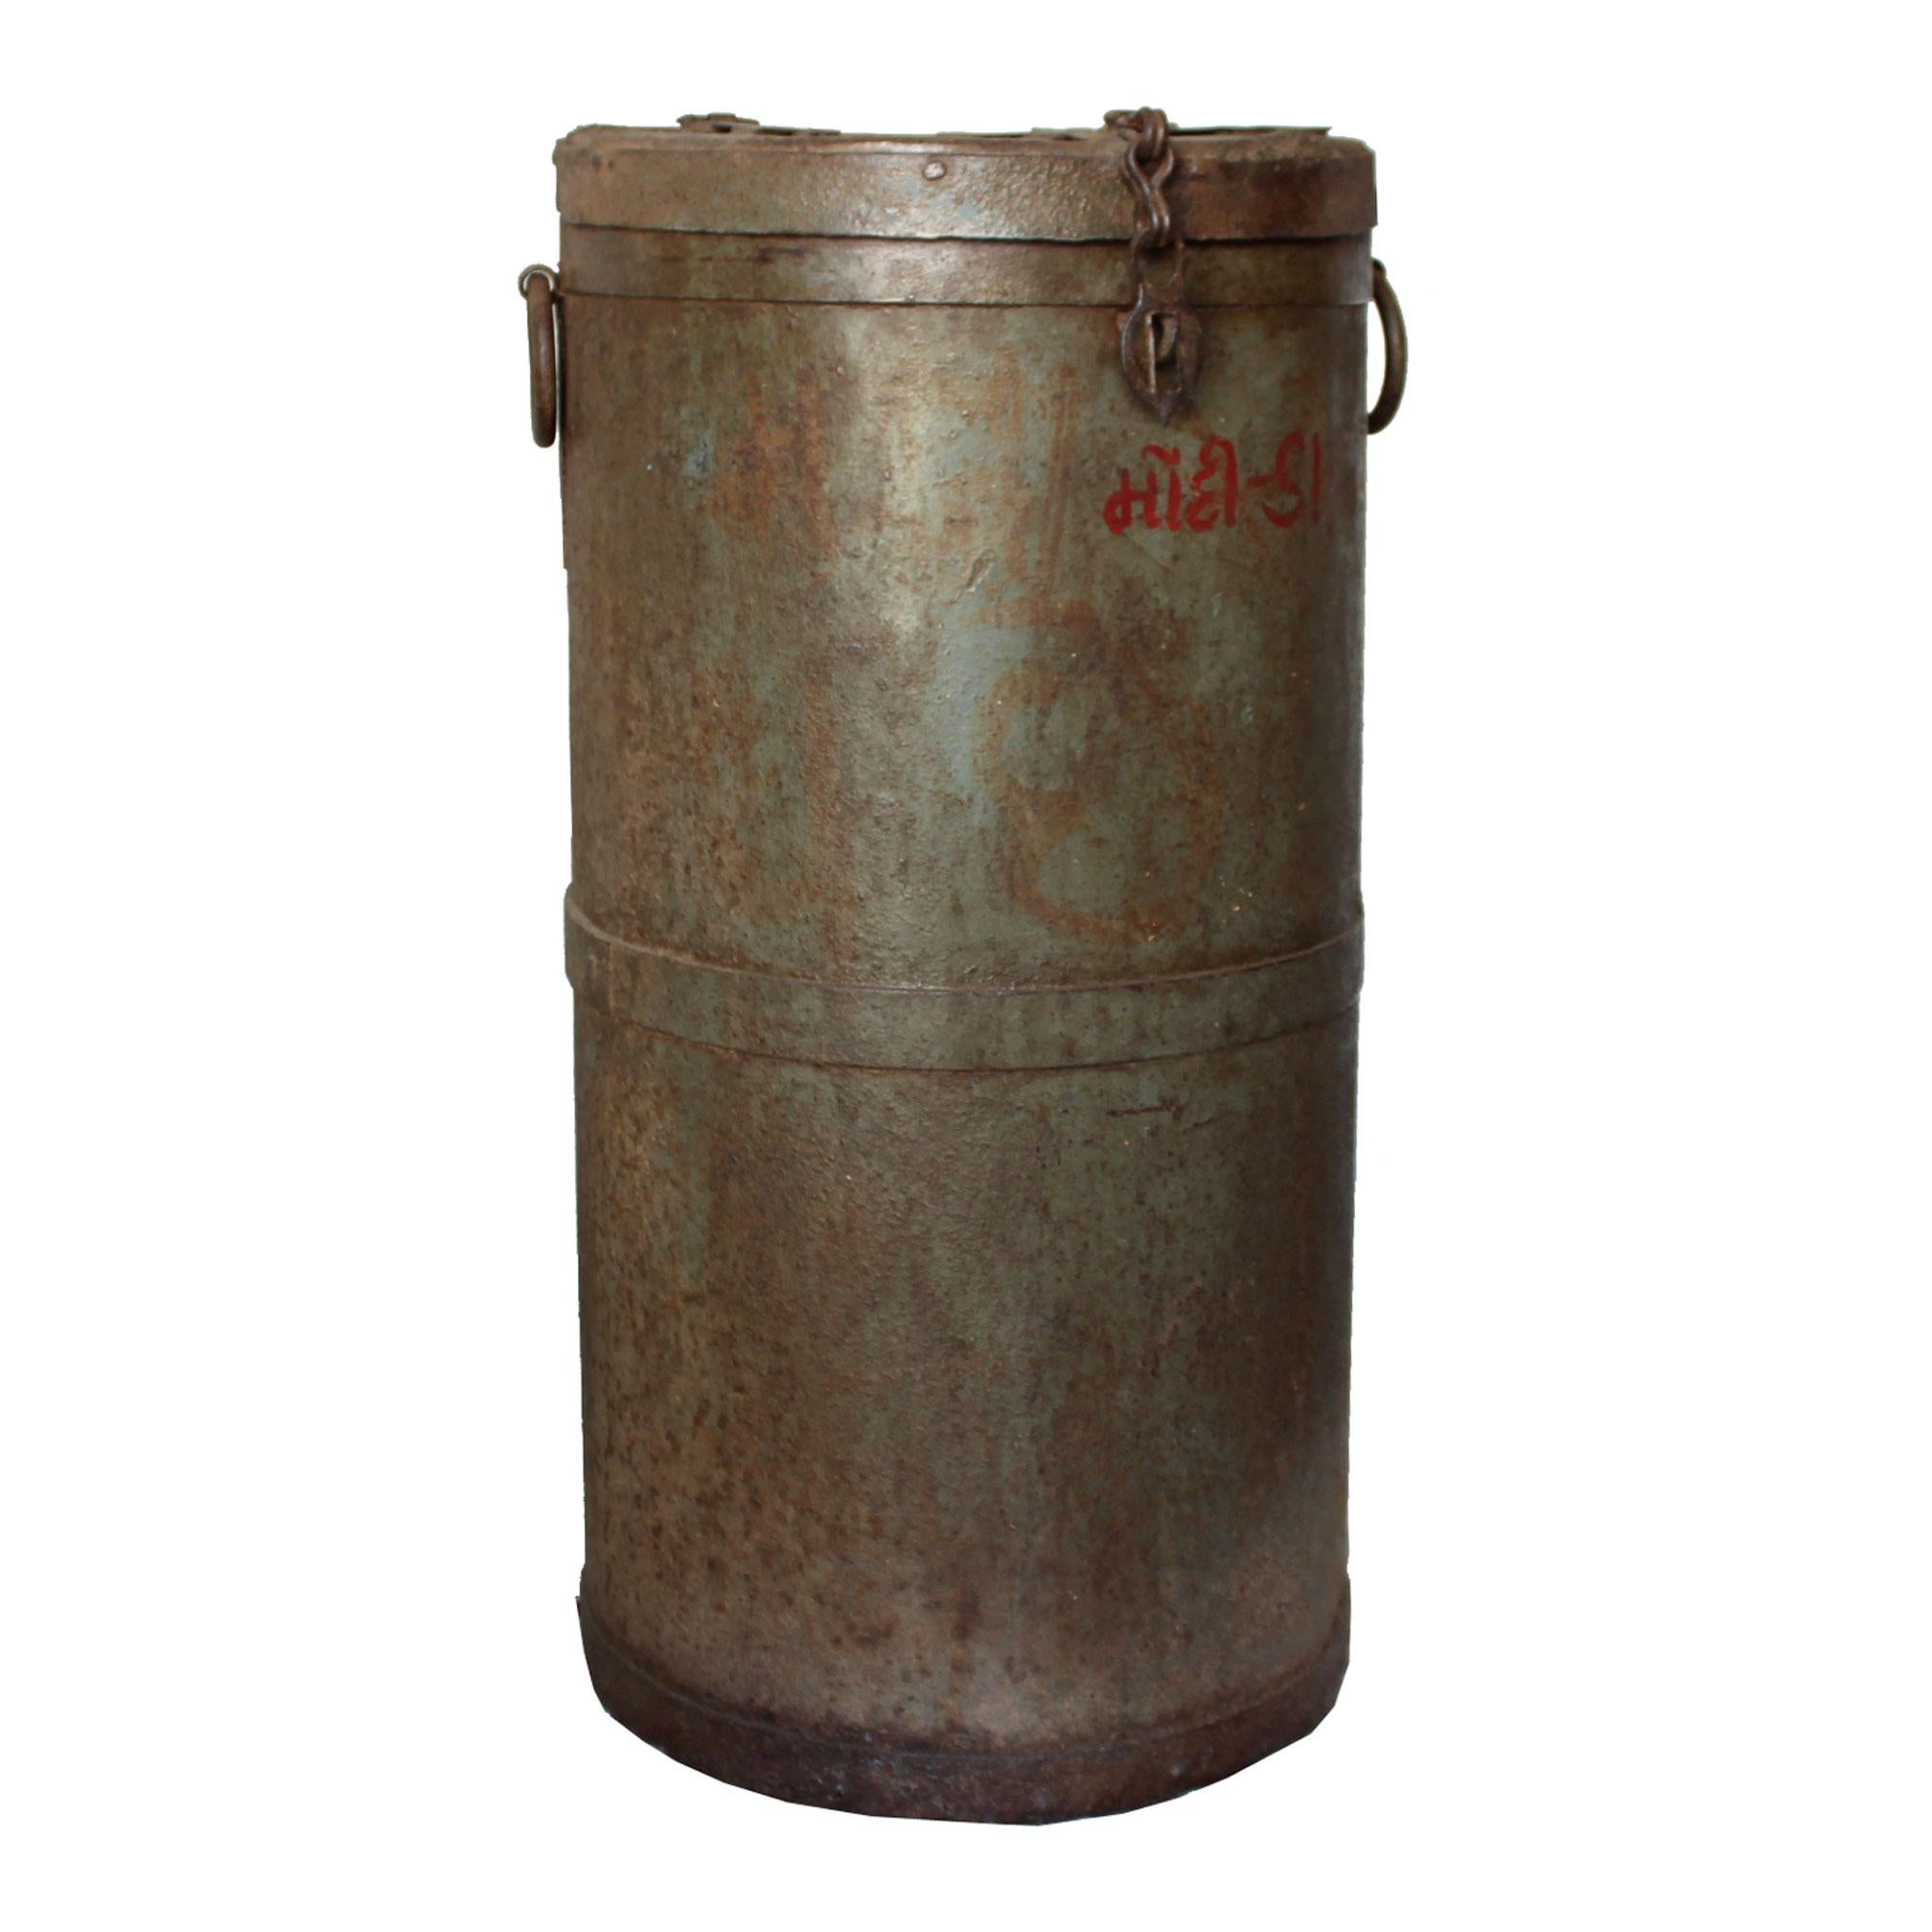 Iron storage container originally used to store grains, India, circa 1940s.